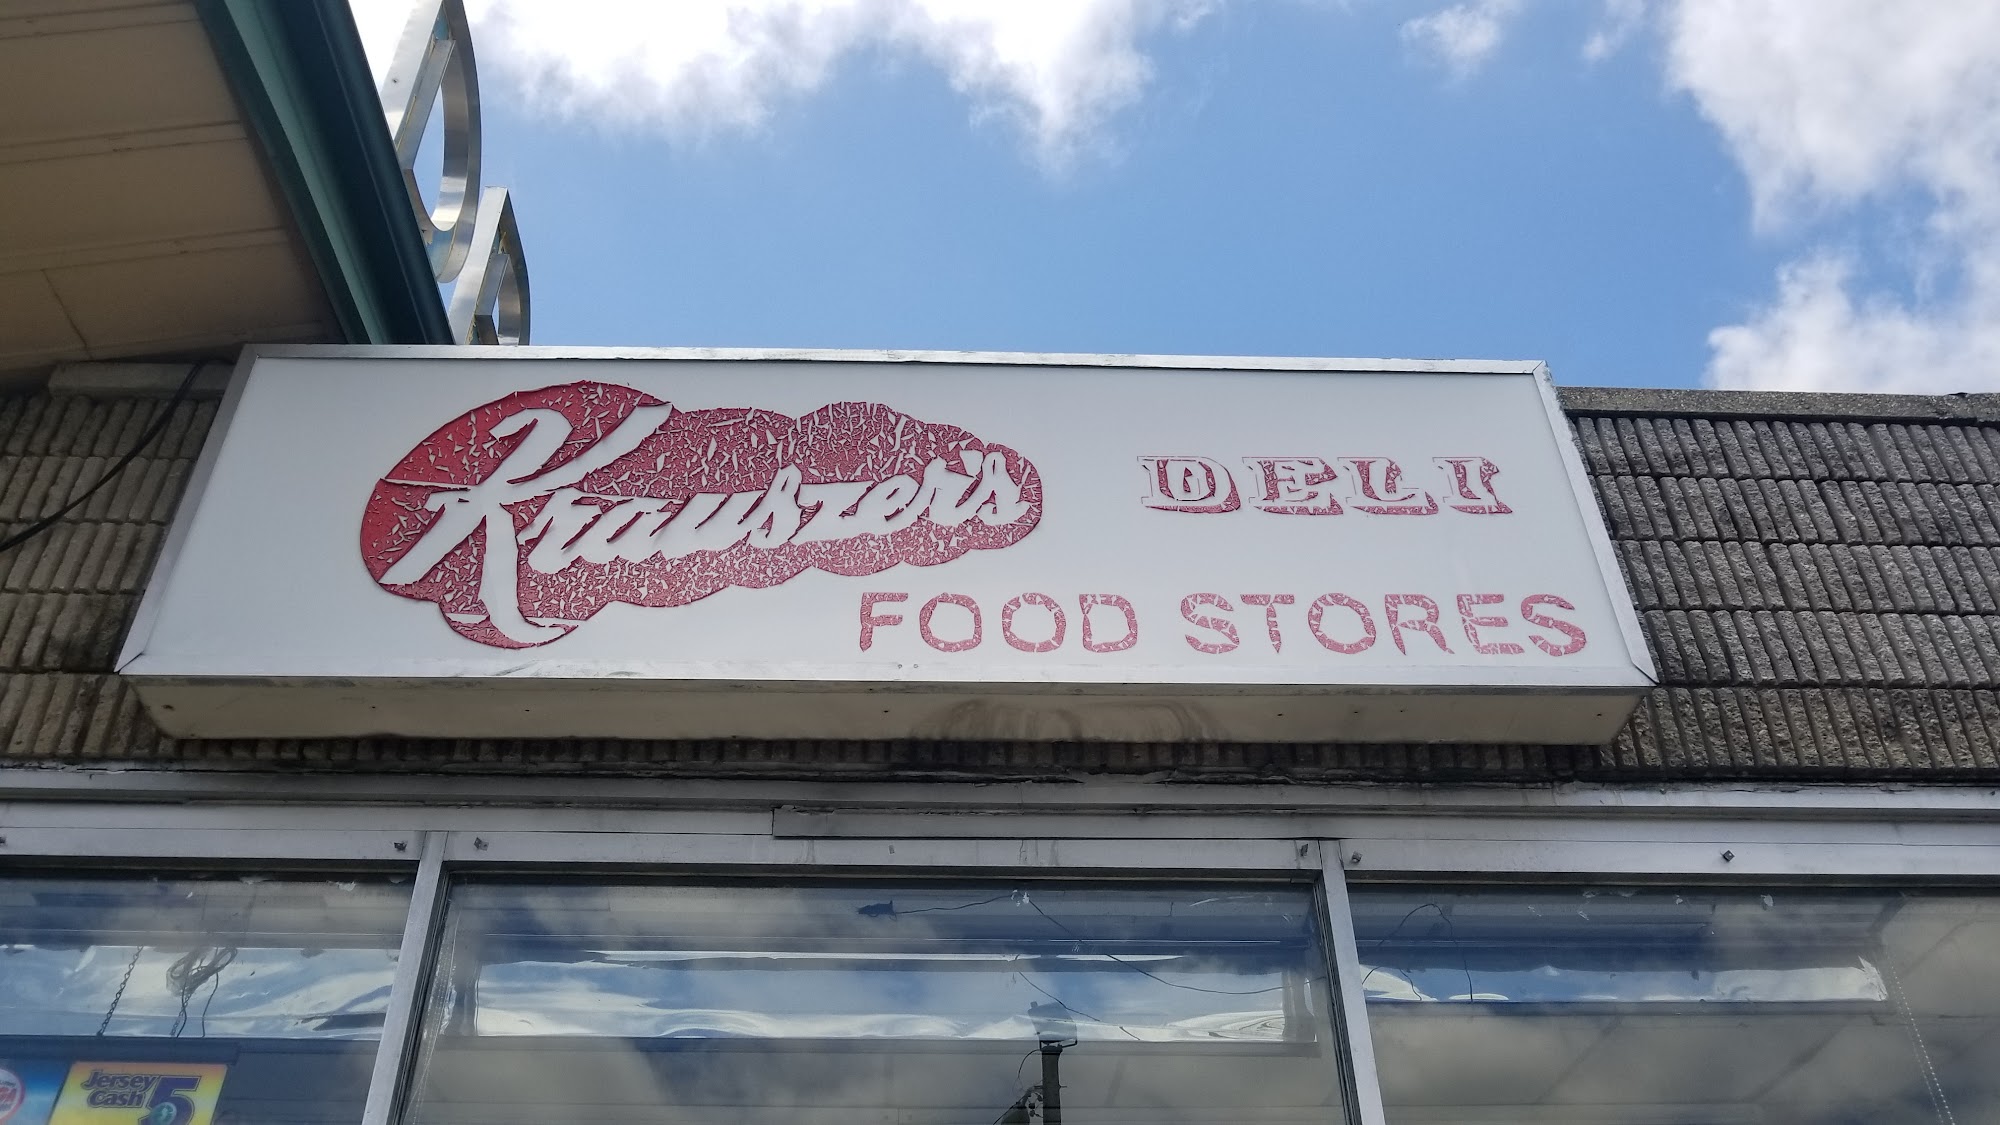 Krauszer's Food Store